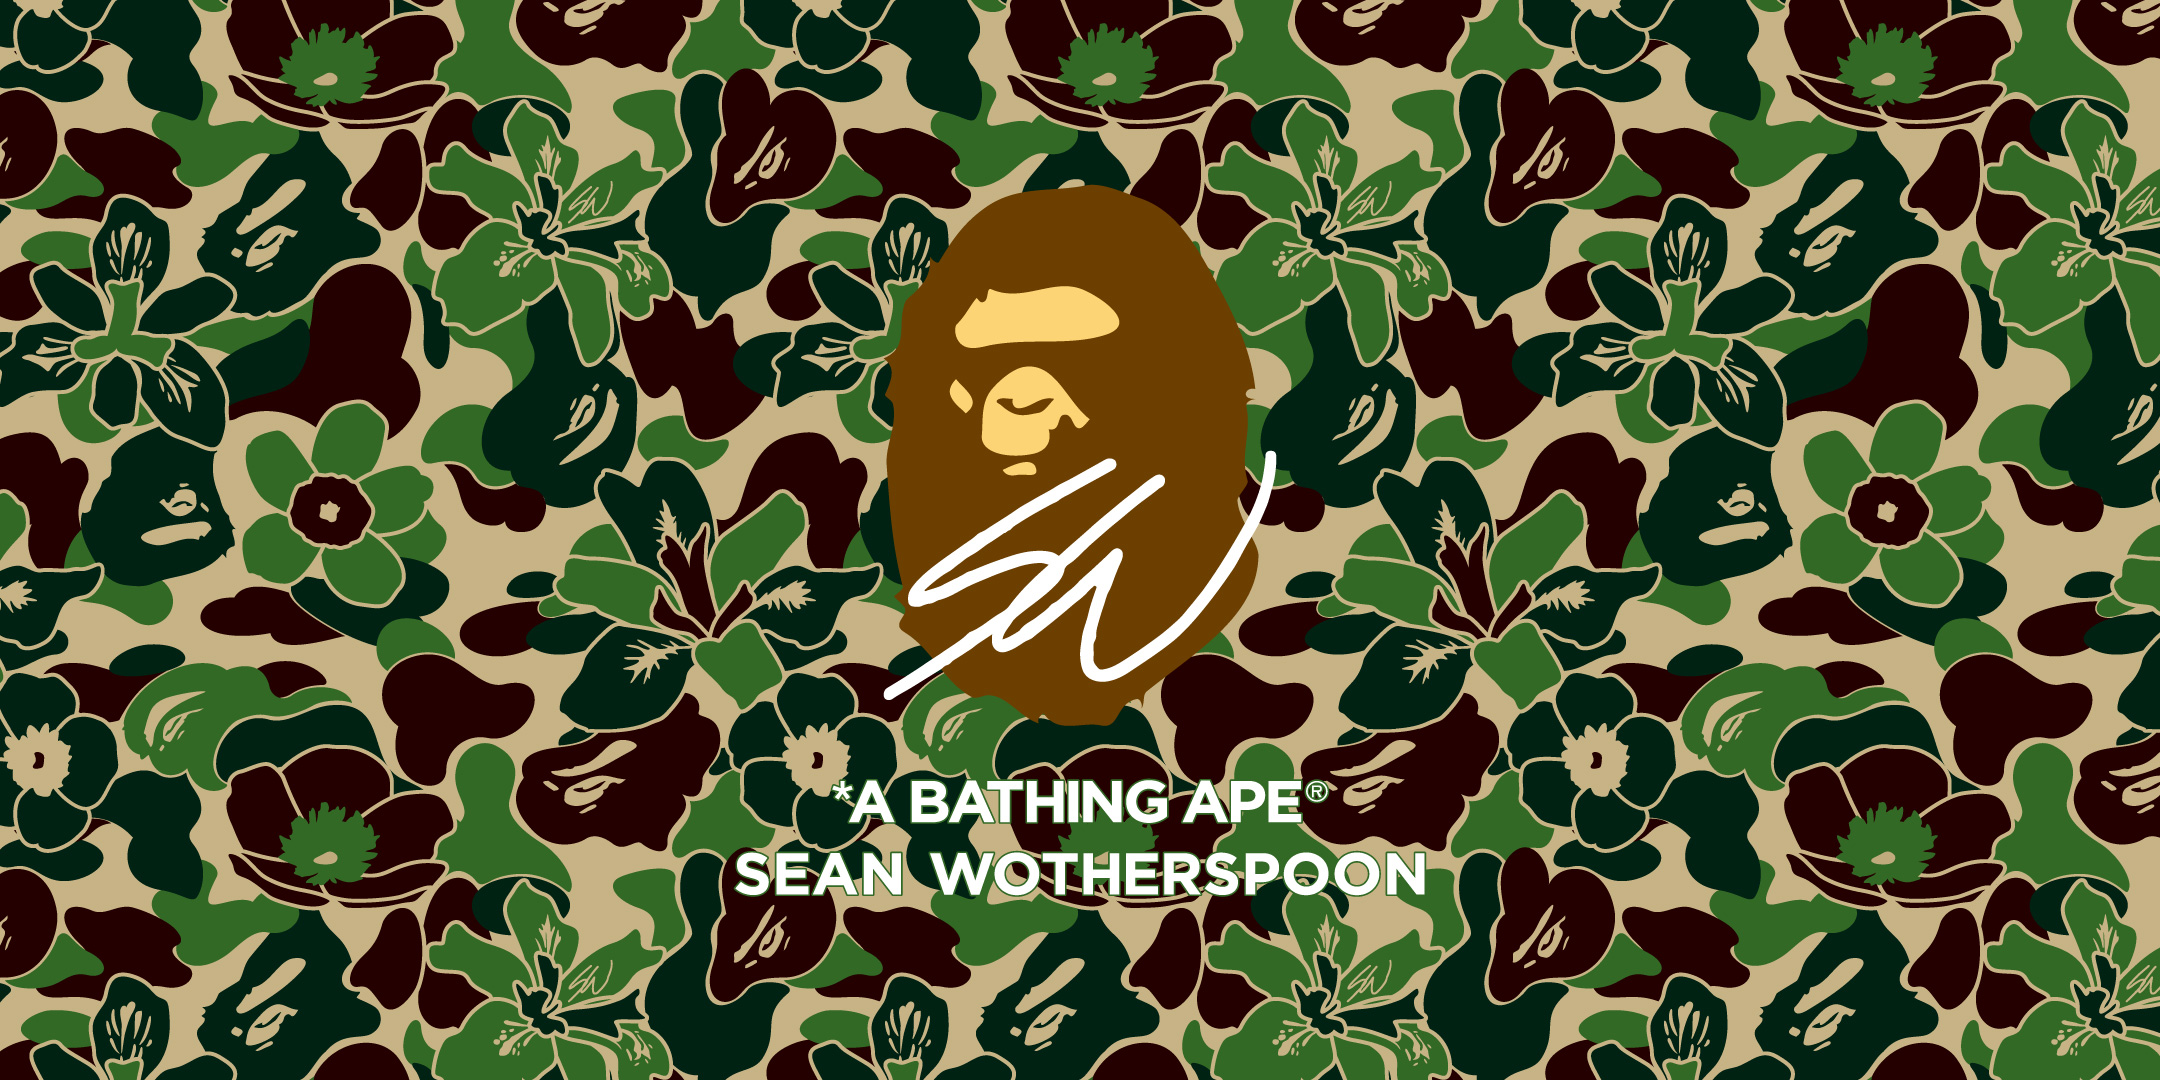 A BATHING APE(R)️ x Sean Wotherspoon